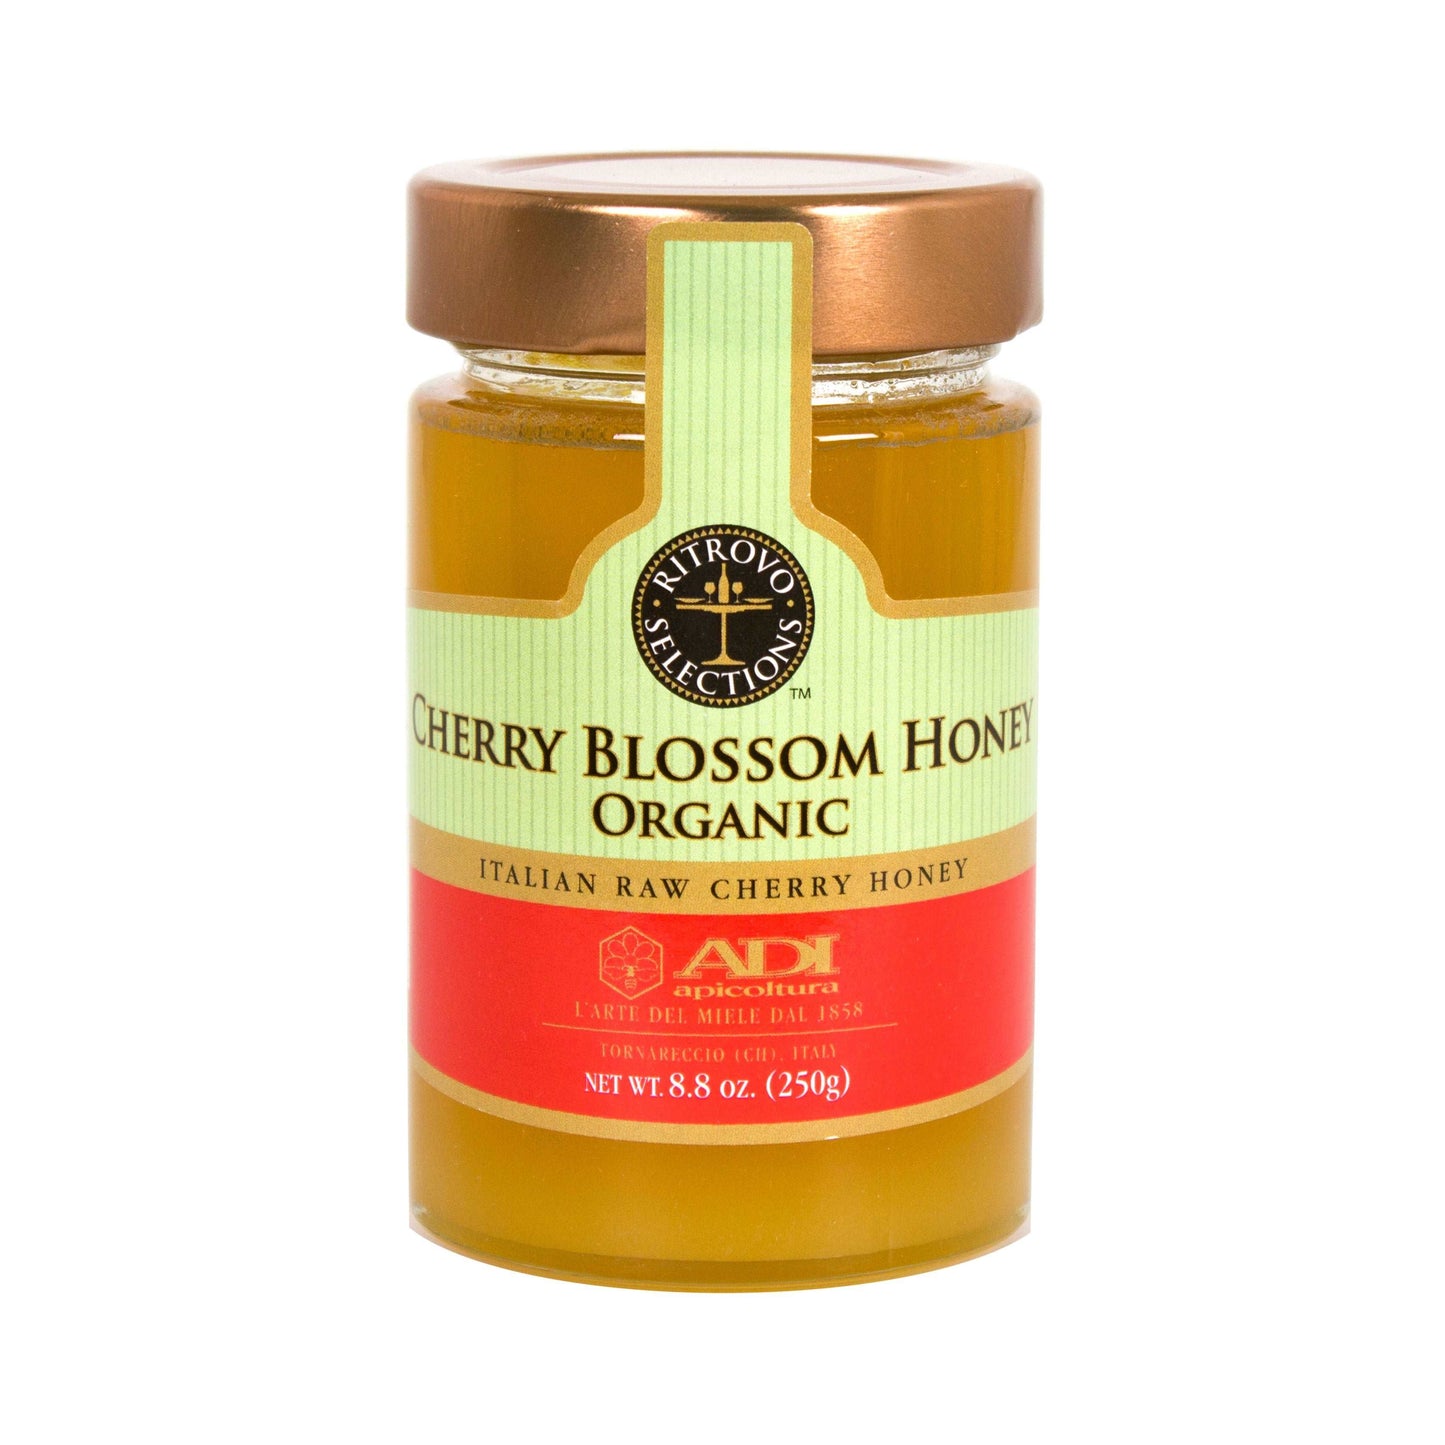 ADI Apicoltura Organic Cherry Blossom Honey